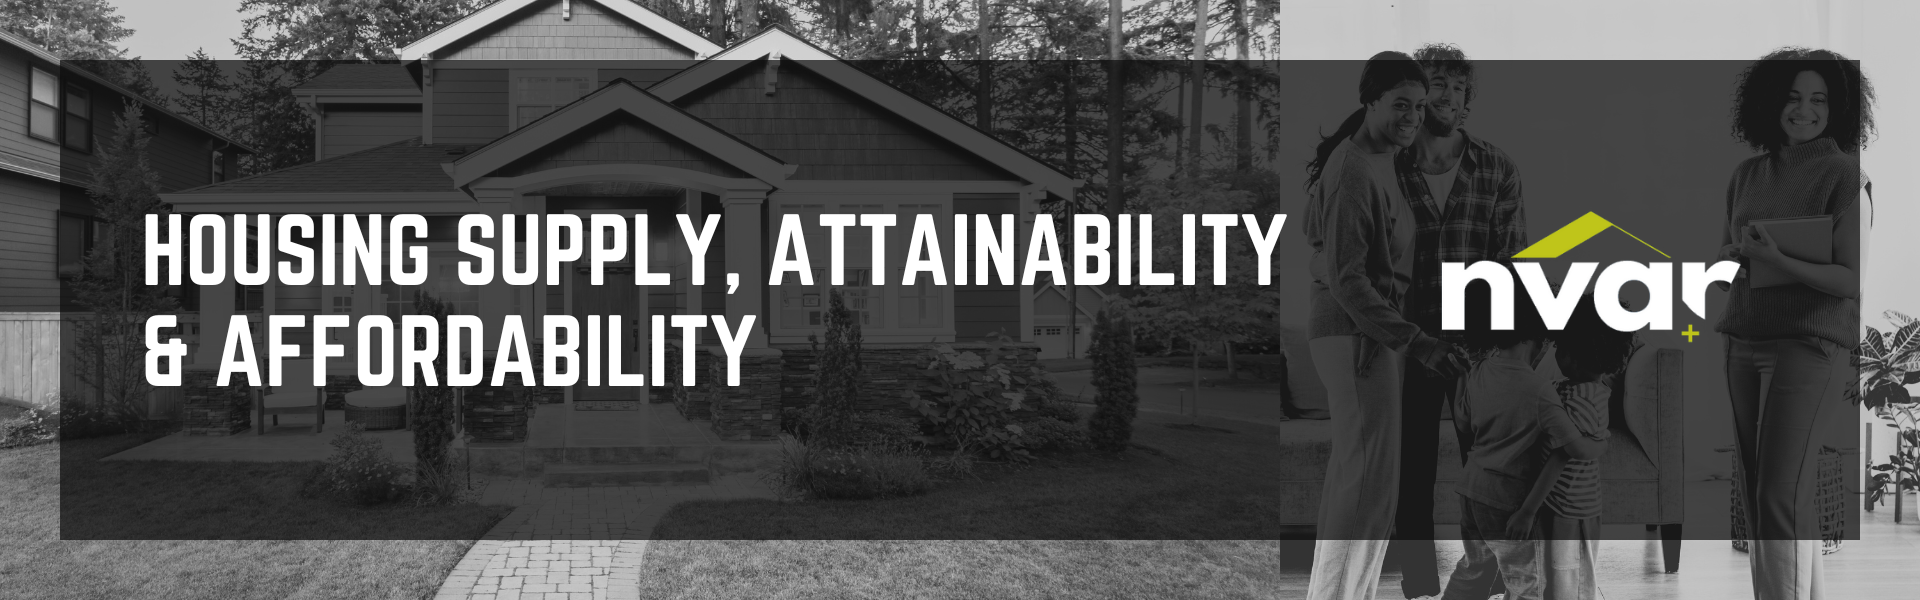 Housing Affordability, Supply & Attainability